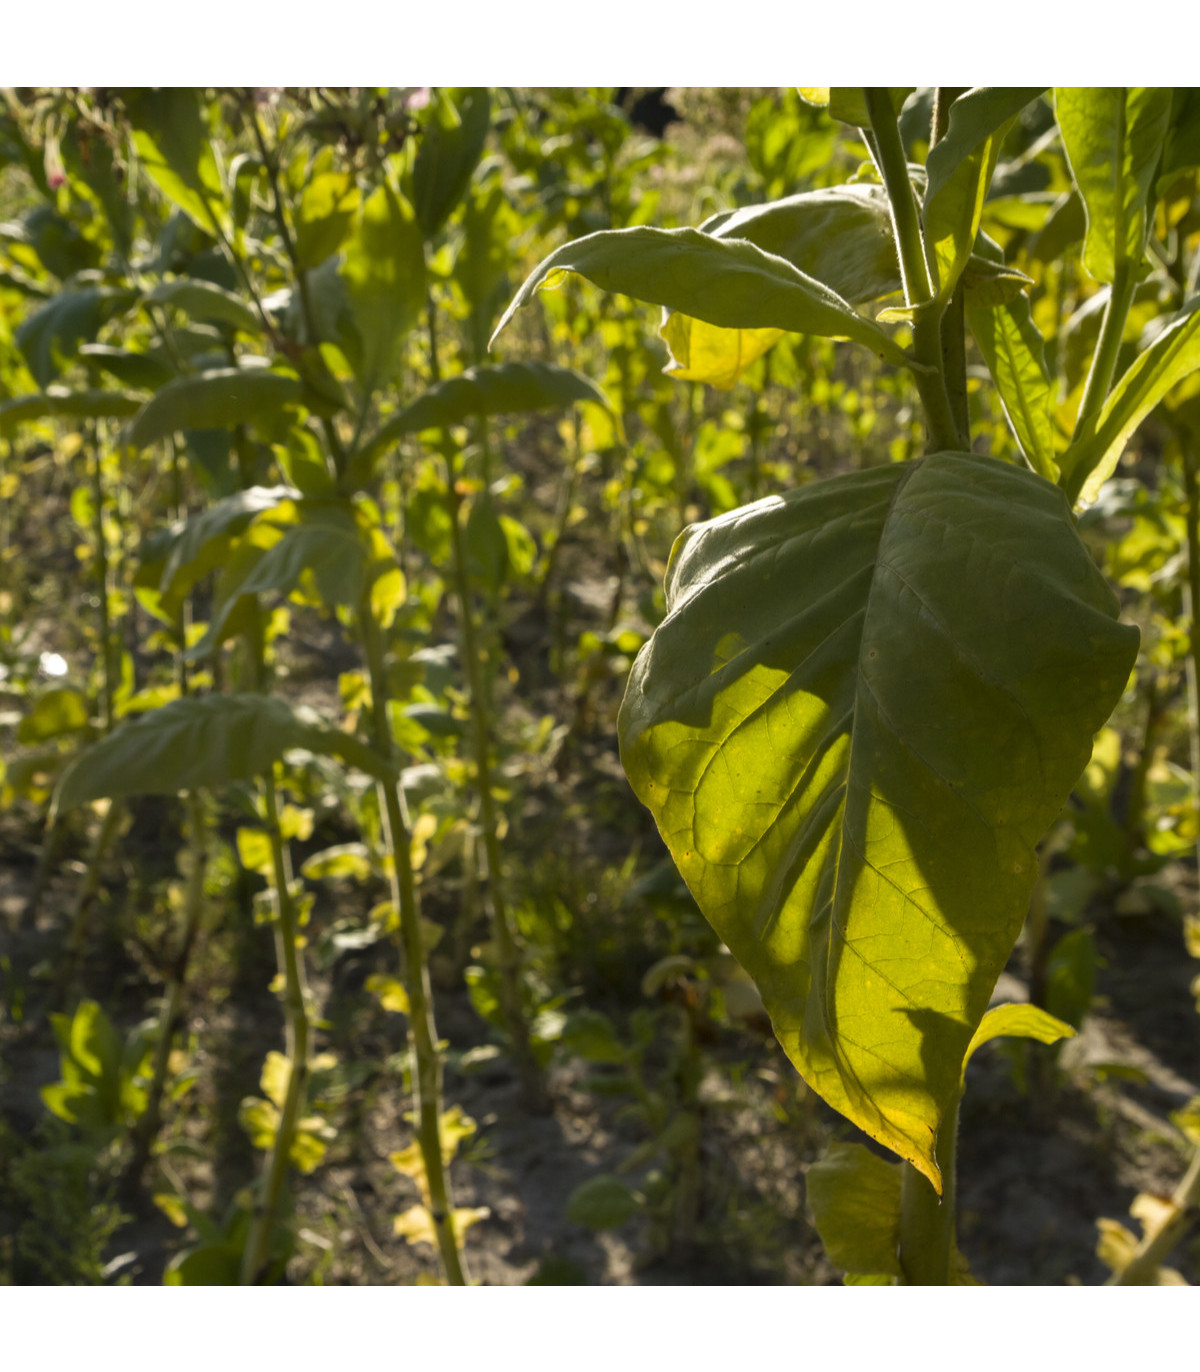 Tabák Hnědý List - Nicotiana tabacum - semena tabáku - 25 ks